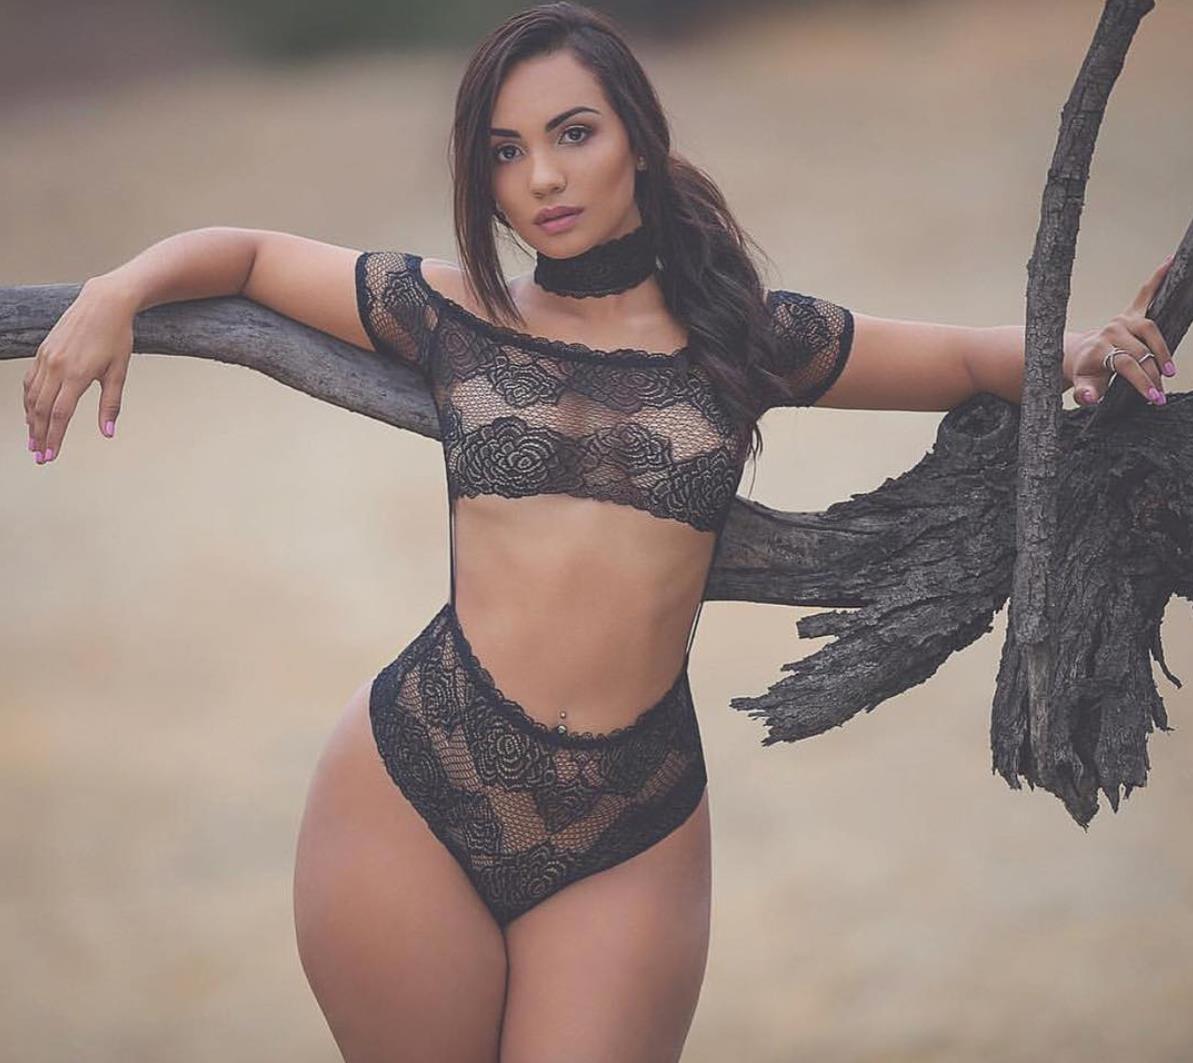 Booty instagram model gets fucked lingerie pic